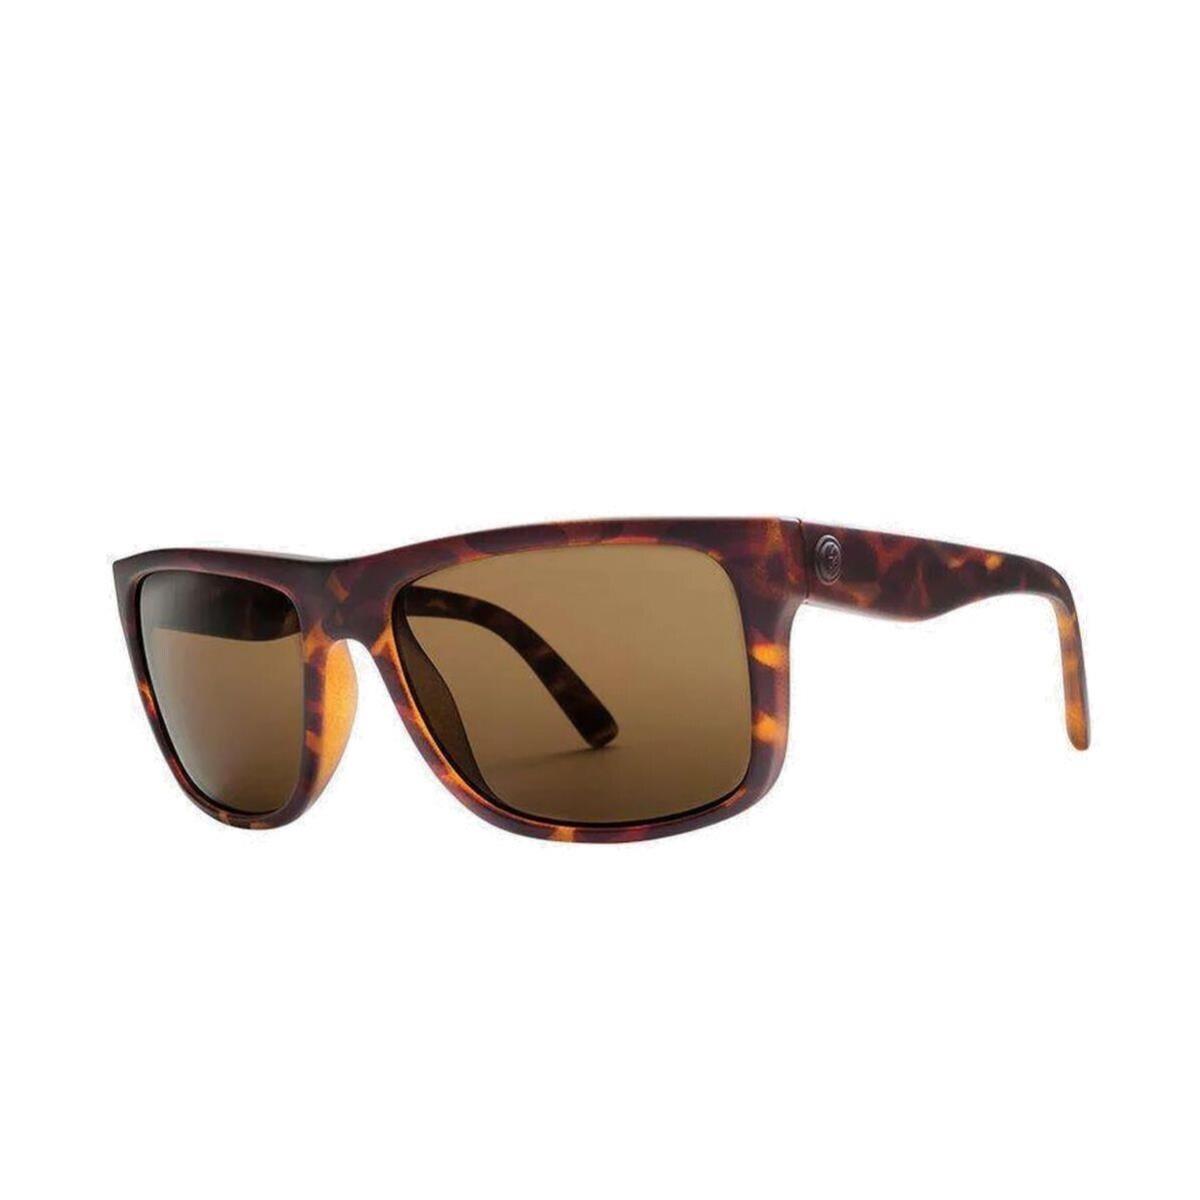 Electric Swingarm XL Sunglasses Matte Tortoise with Bronze Polarized Lens